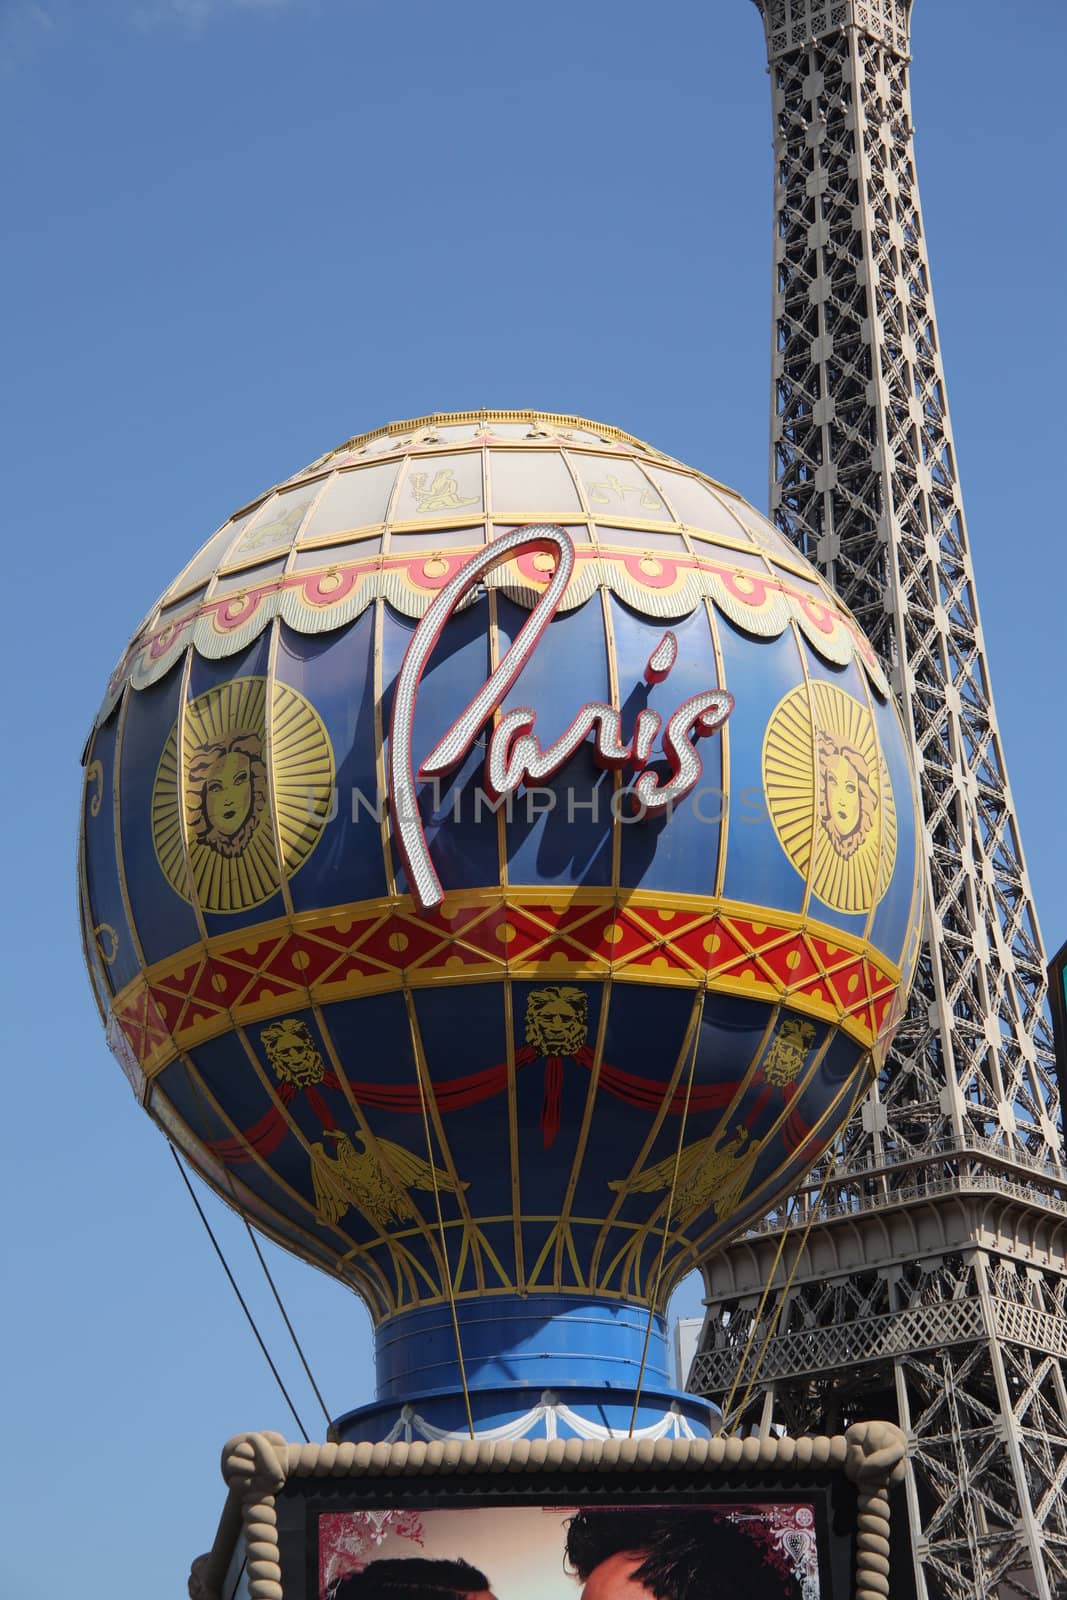 Las Vegas - Paris Hotel by Ffooter